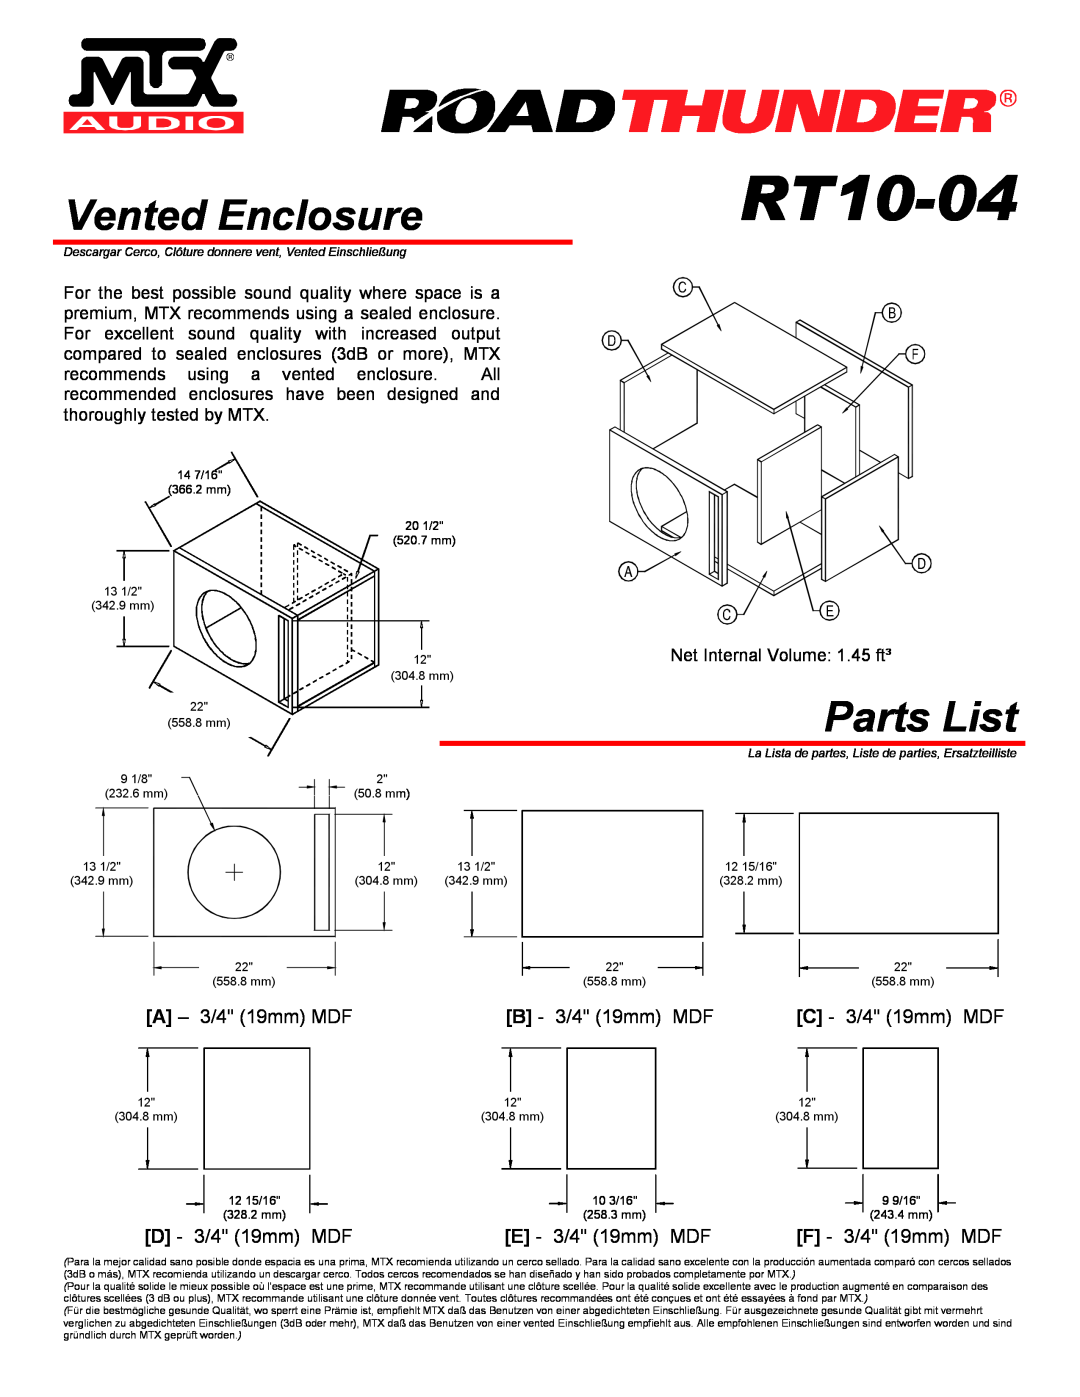 MTX Audio RT10-04 Vented Enclosure, E - 3/4 19mm MDF, F - 3/4 19mm MDF, Parts List, A - 3/4 19mm MDF, B - 3/4 19mm MDF 